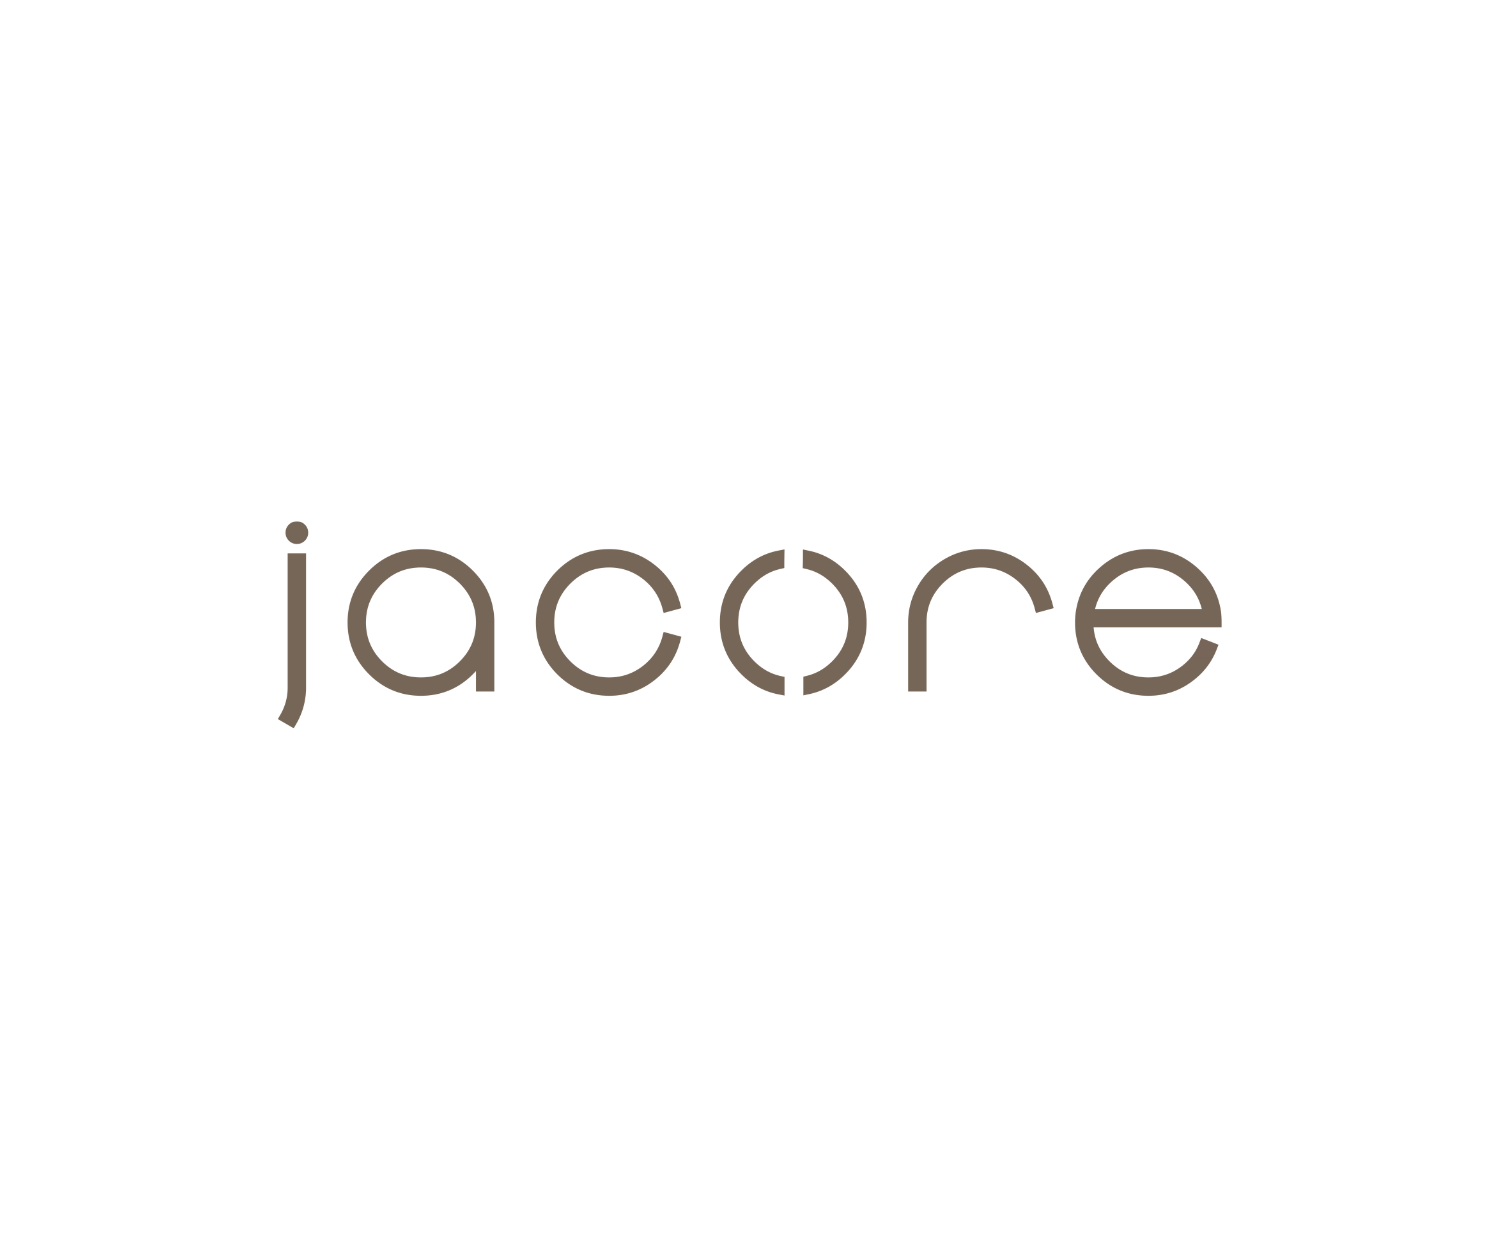 Jacore logo - I AM SQUARED